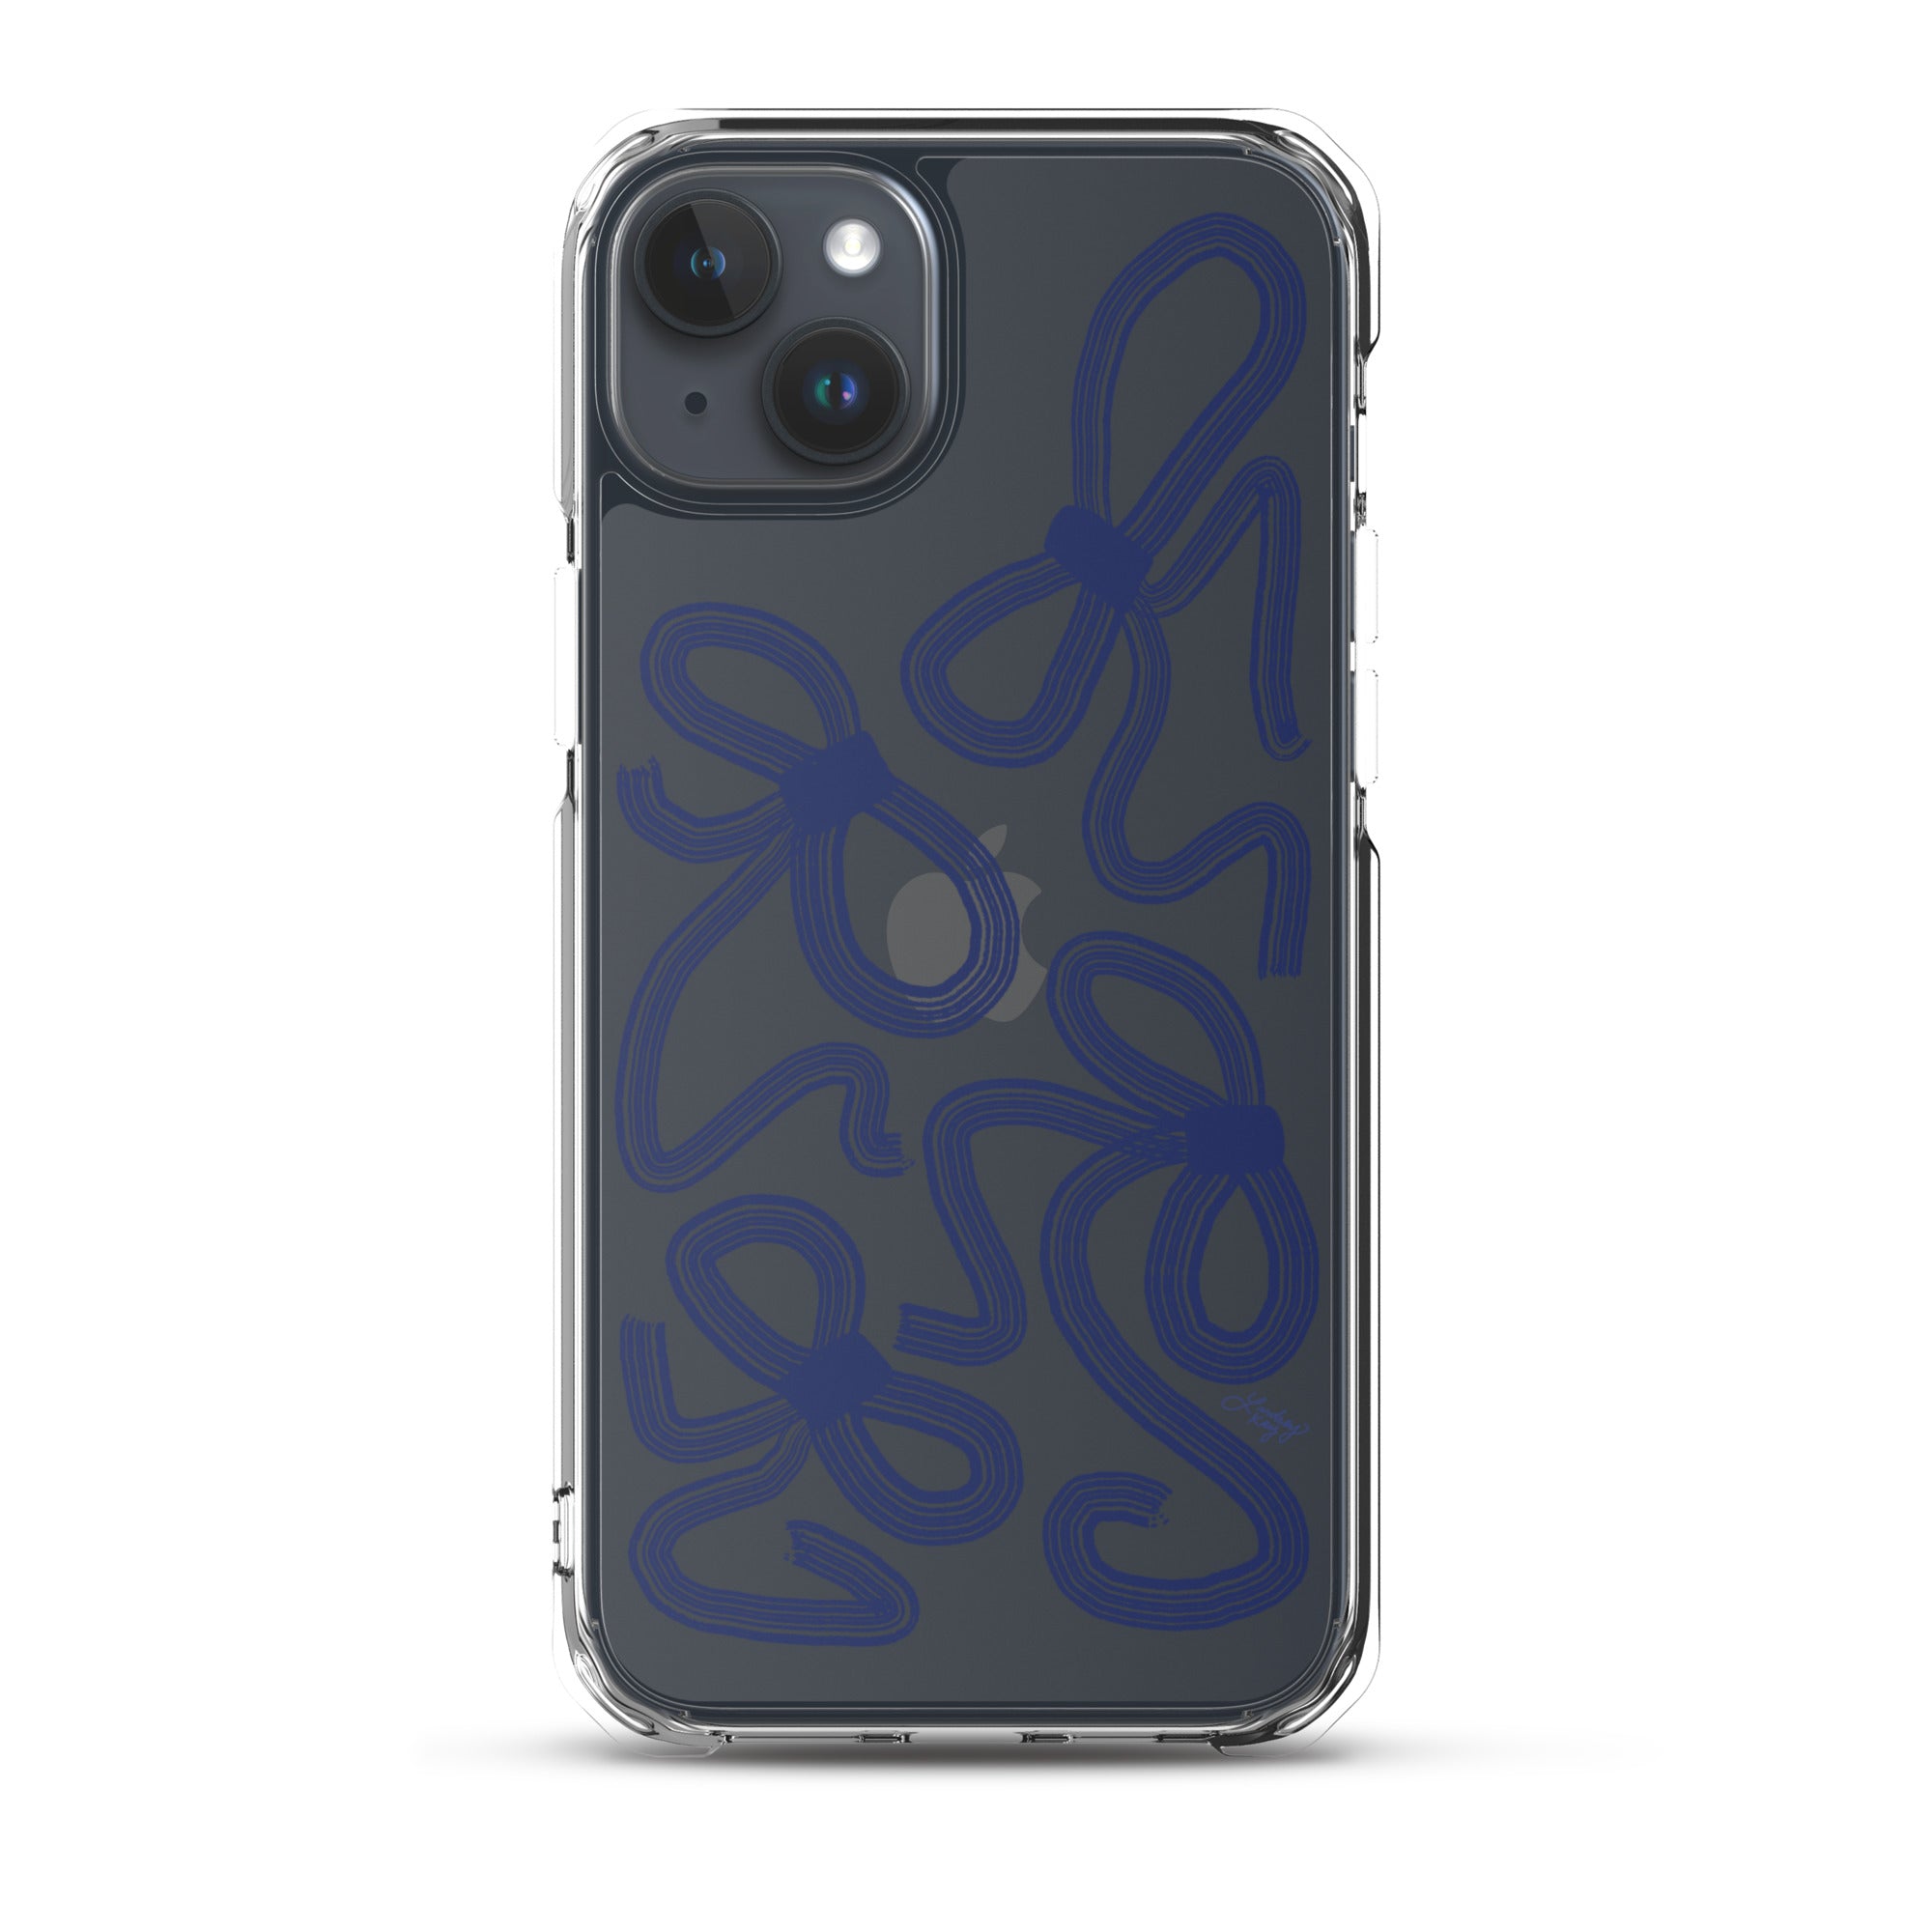 Ilustración de cinta azul marino - Funda transparente para iPhone®